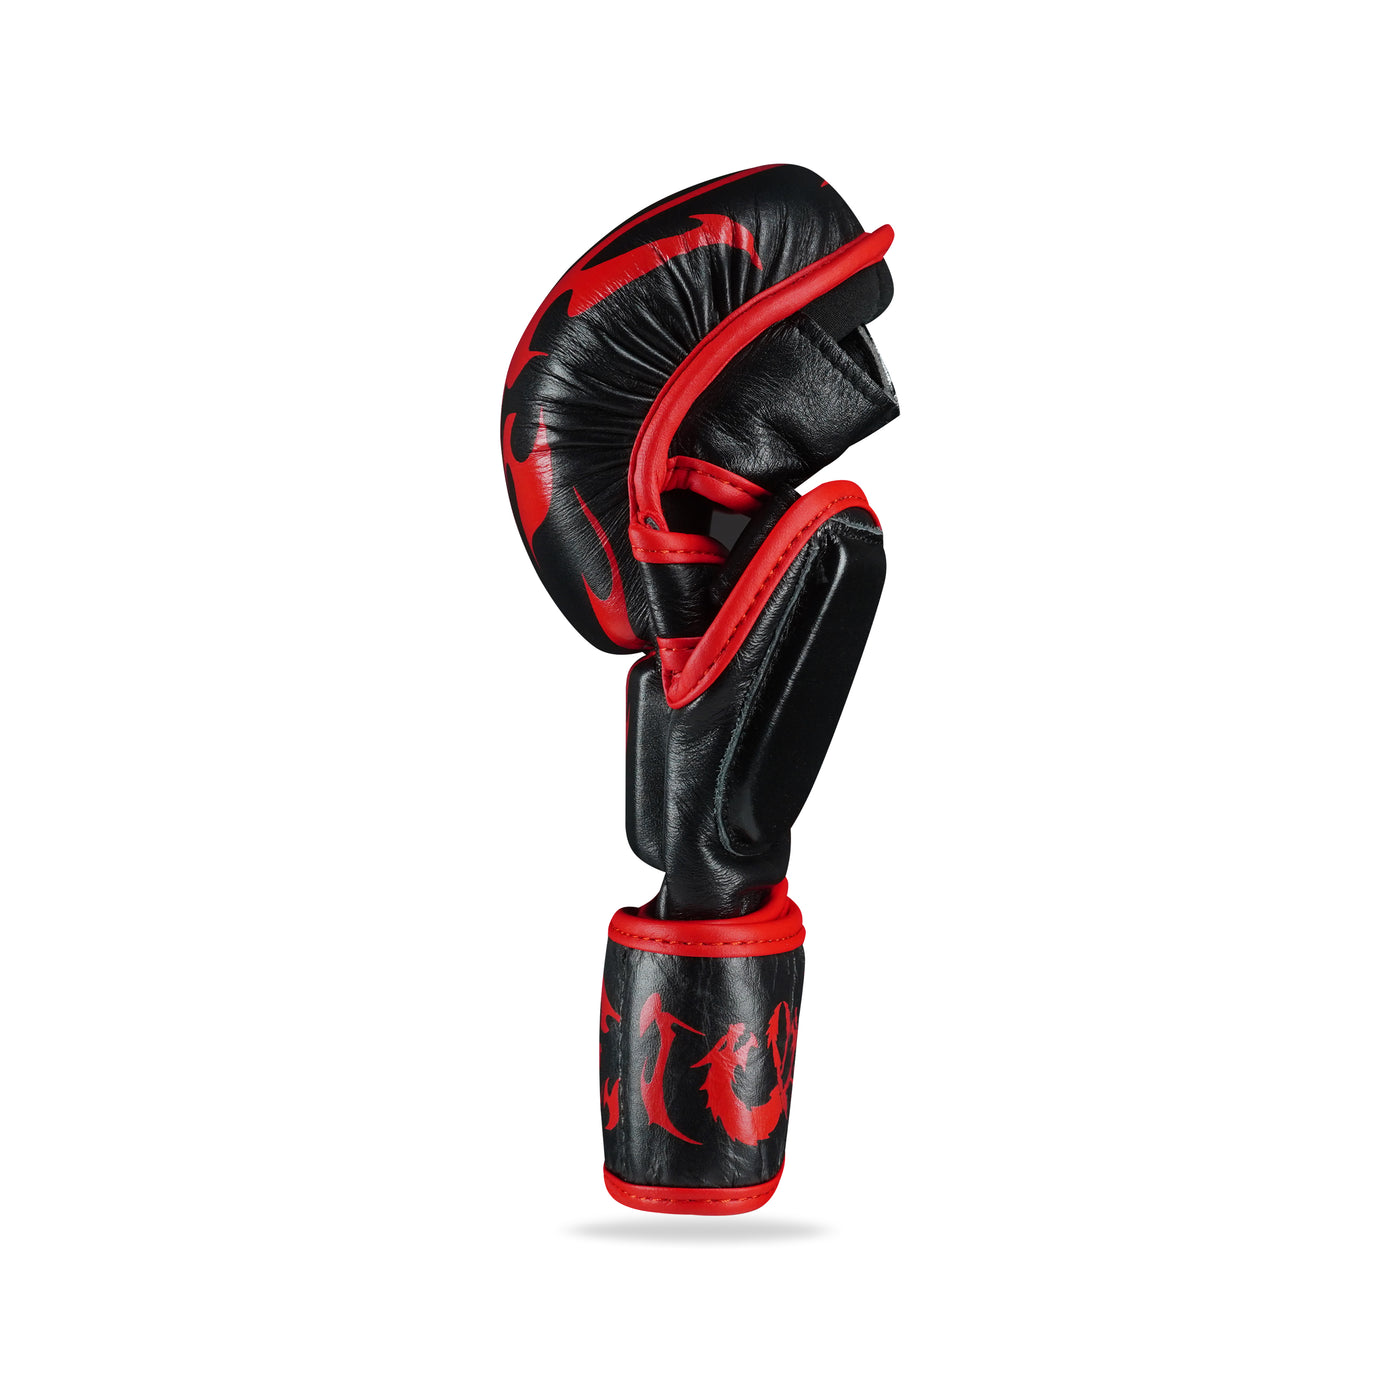 Canelo Black/Red Genuine Leather MMA Training Gloves